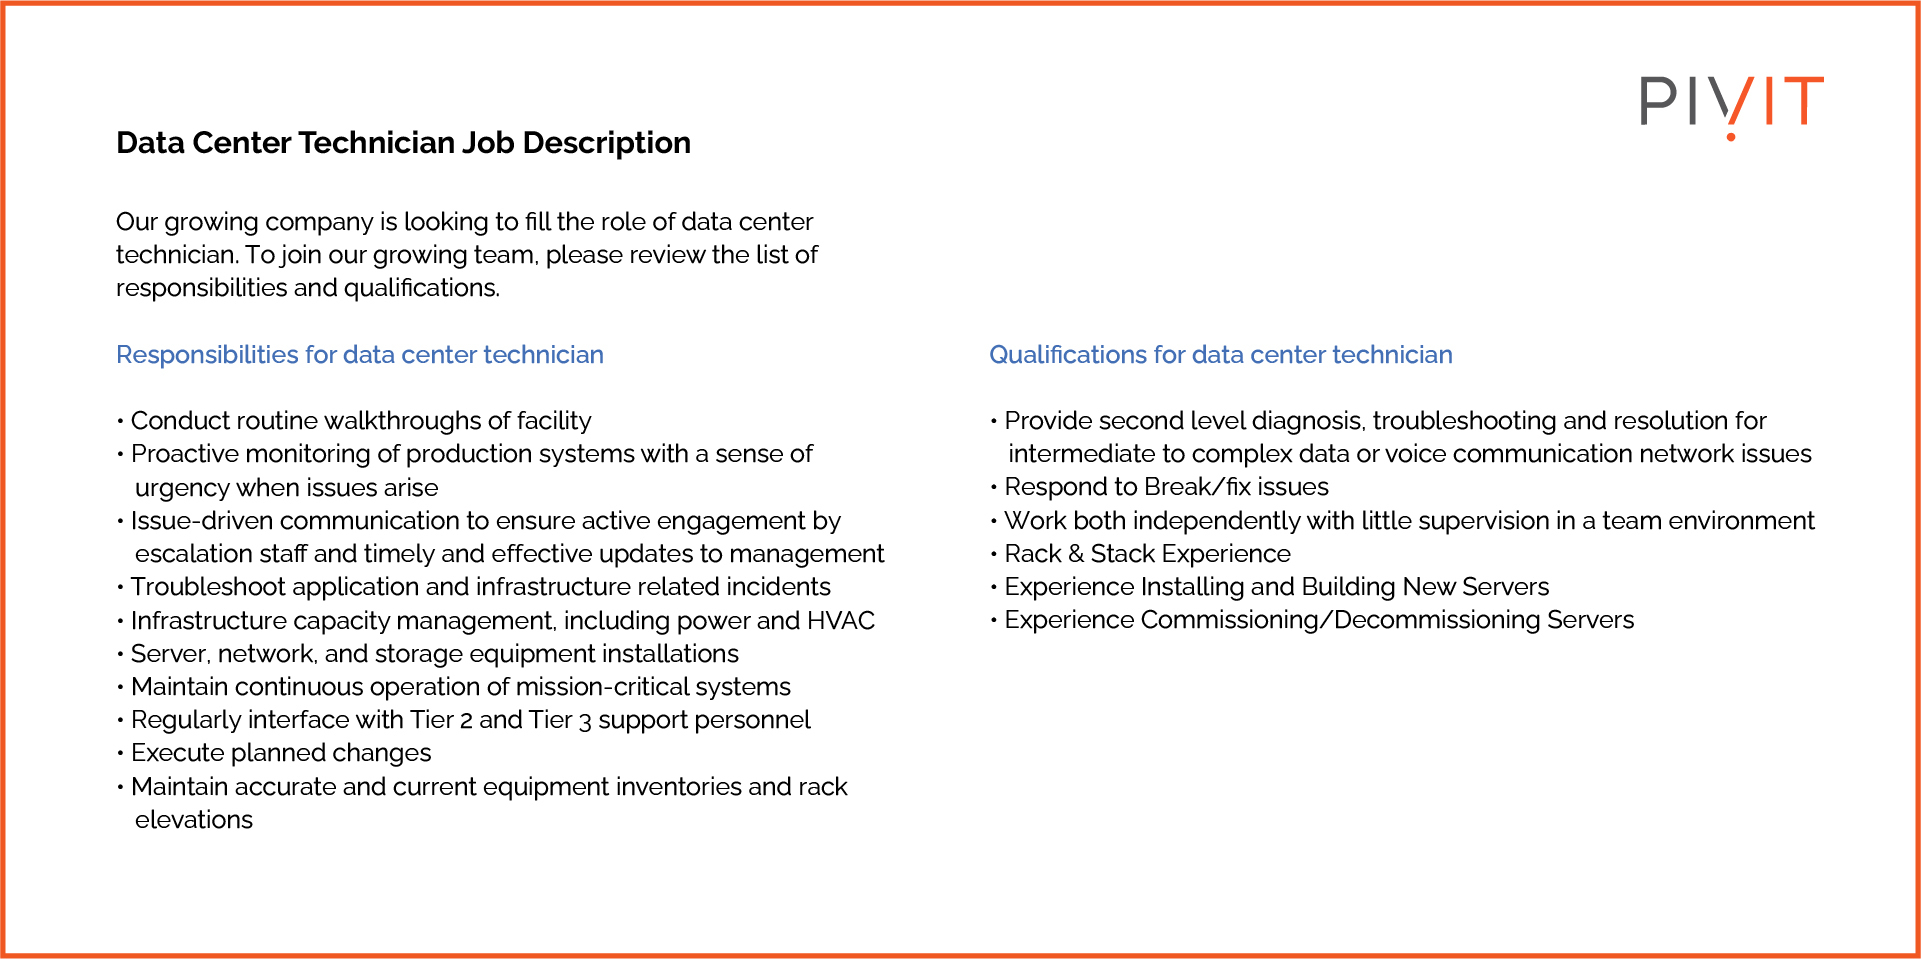 Data Center Technician Job Description